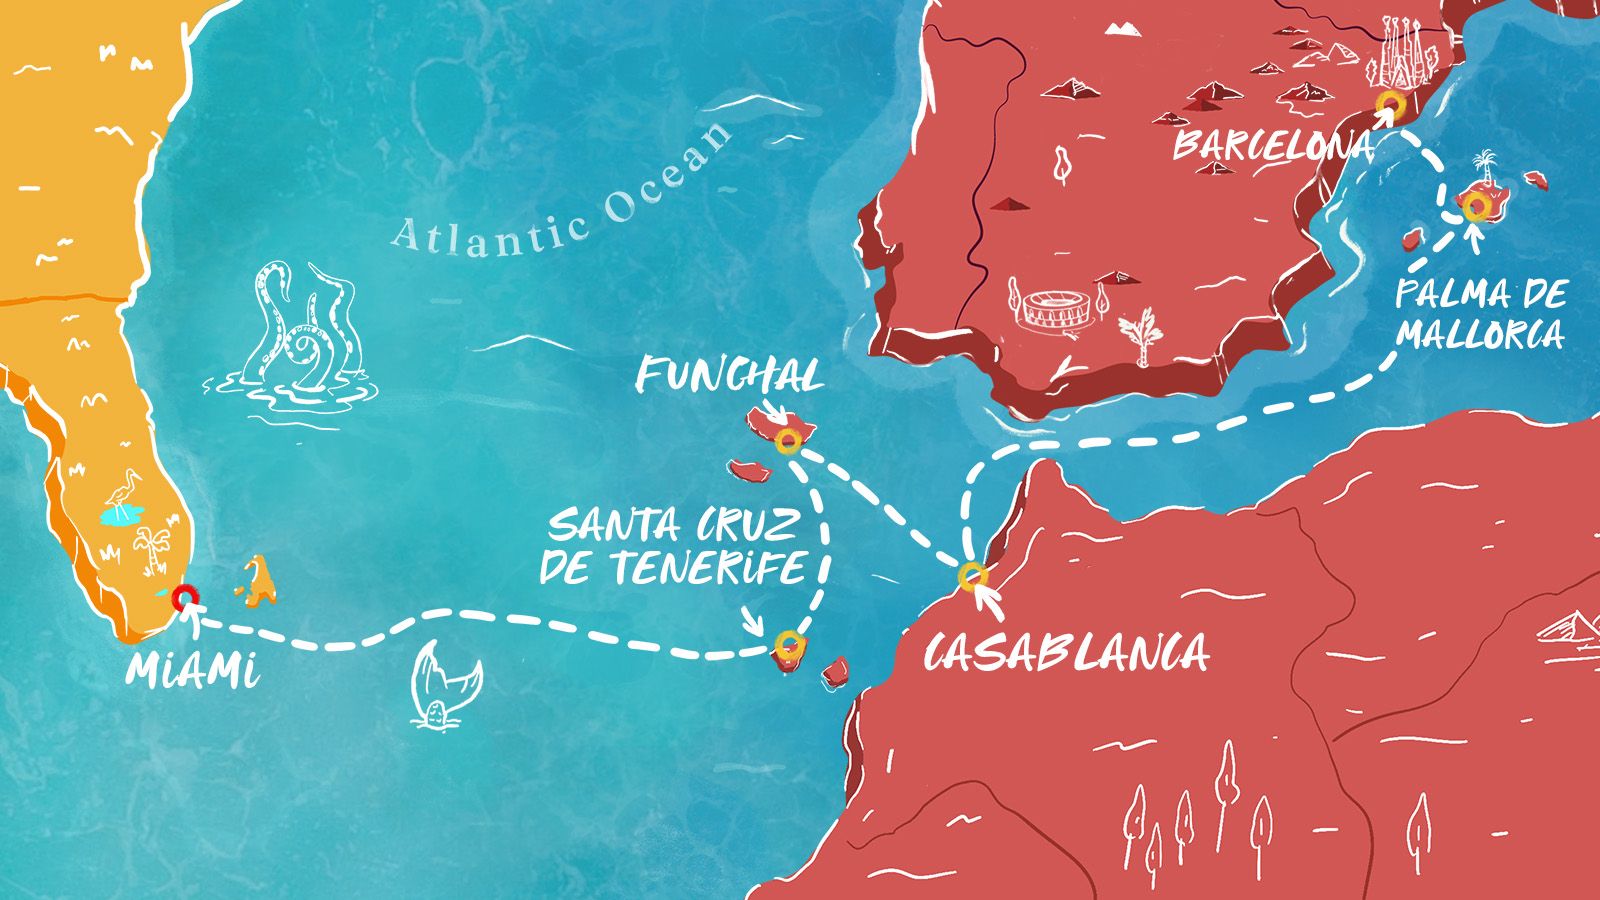 Spain to Miami Transatlantic Itinerary Map